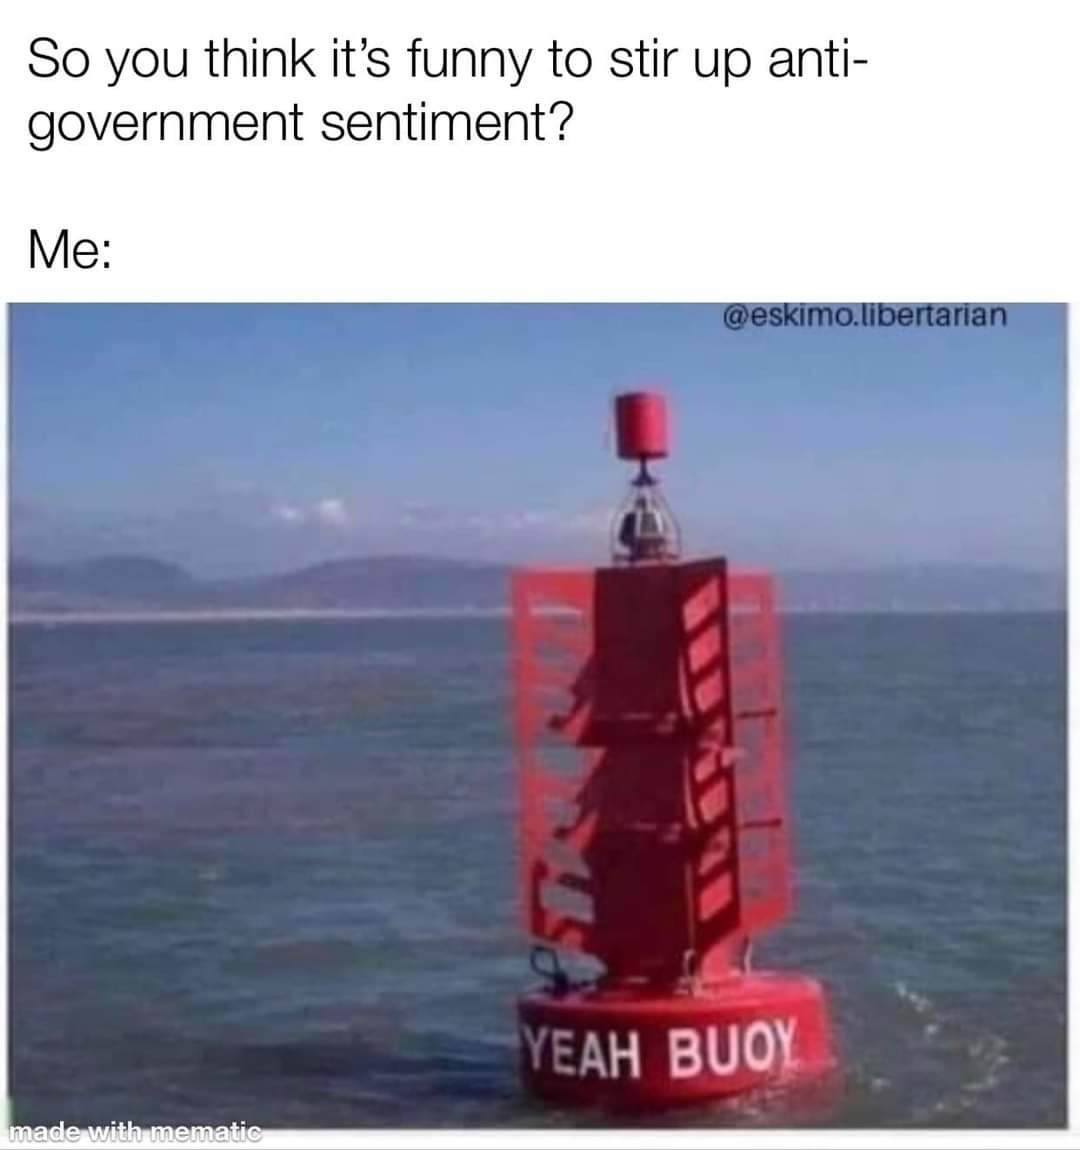 Yeah buoy - meme